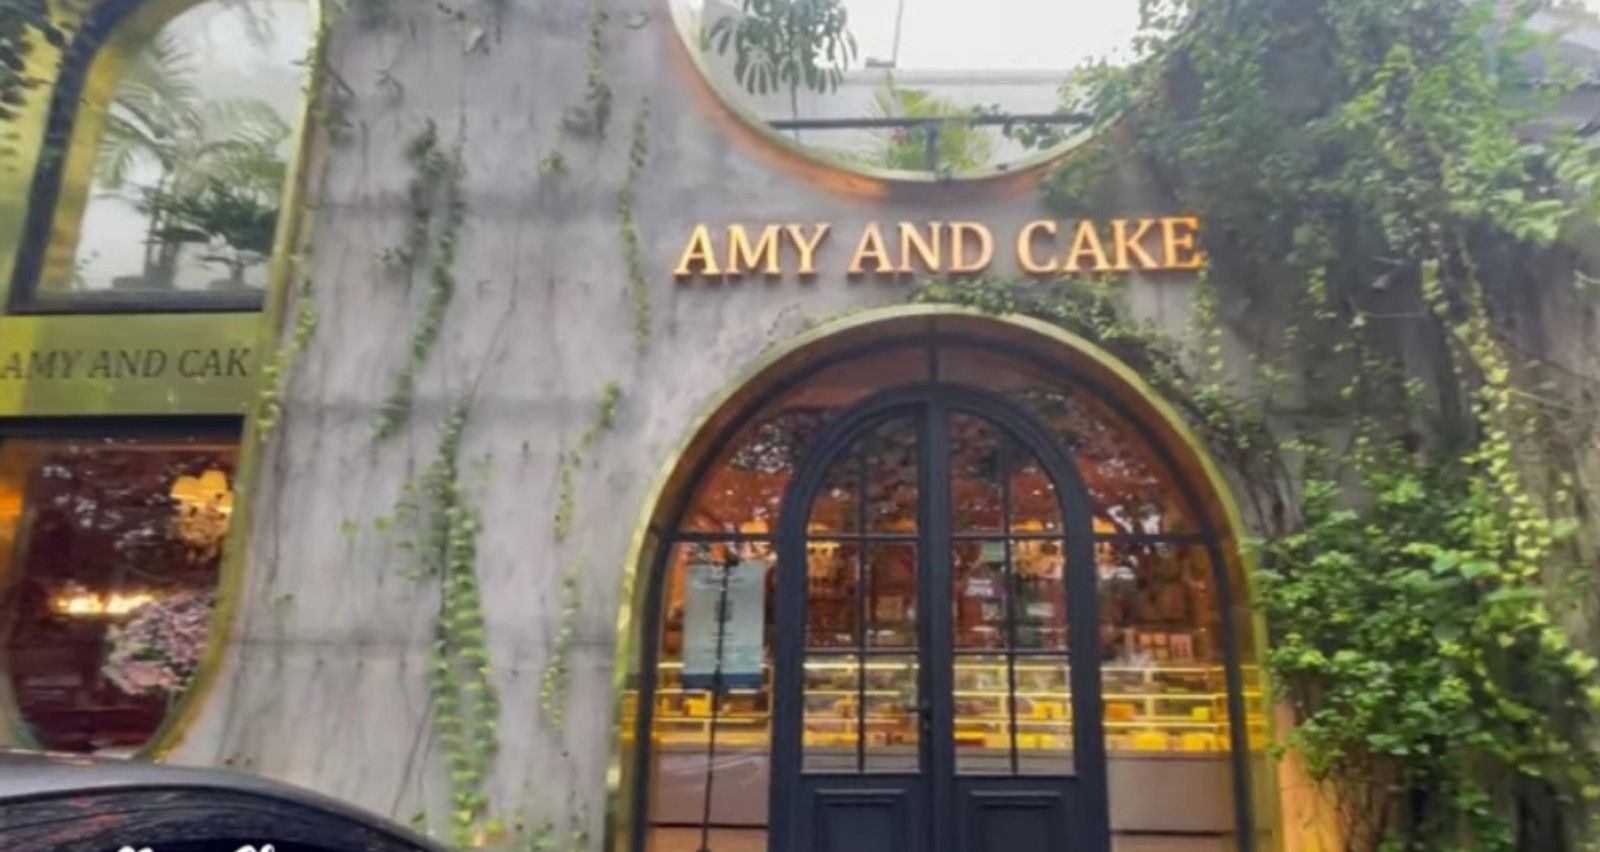 Amy and Cake, resto estetik di Pondok Aren Tangerang Selatan Banten/tangkapan layar youtube/Channel BoiEka